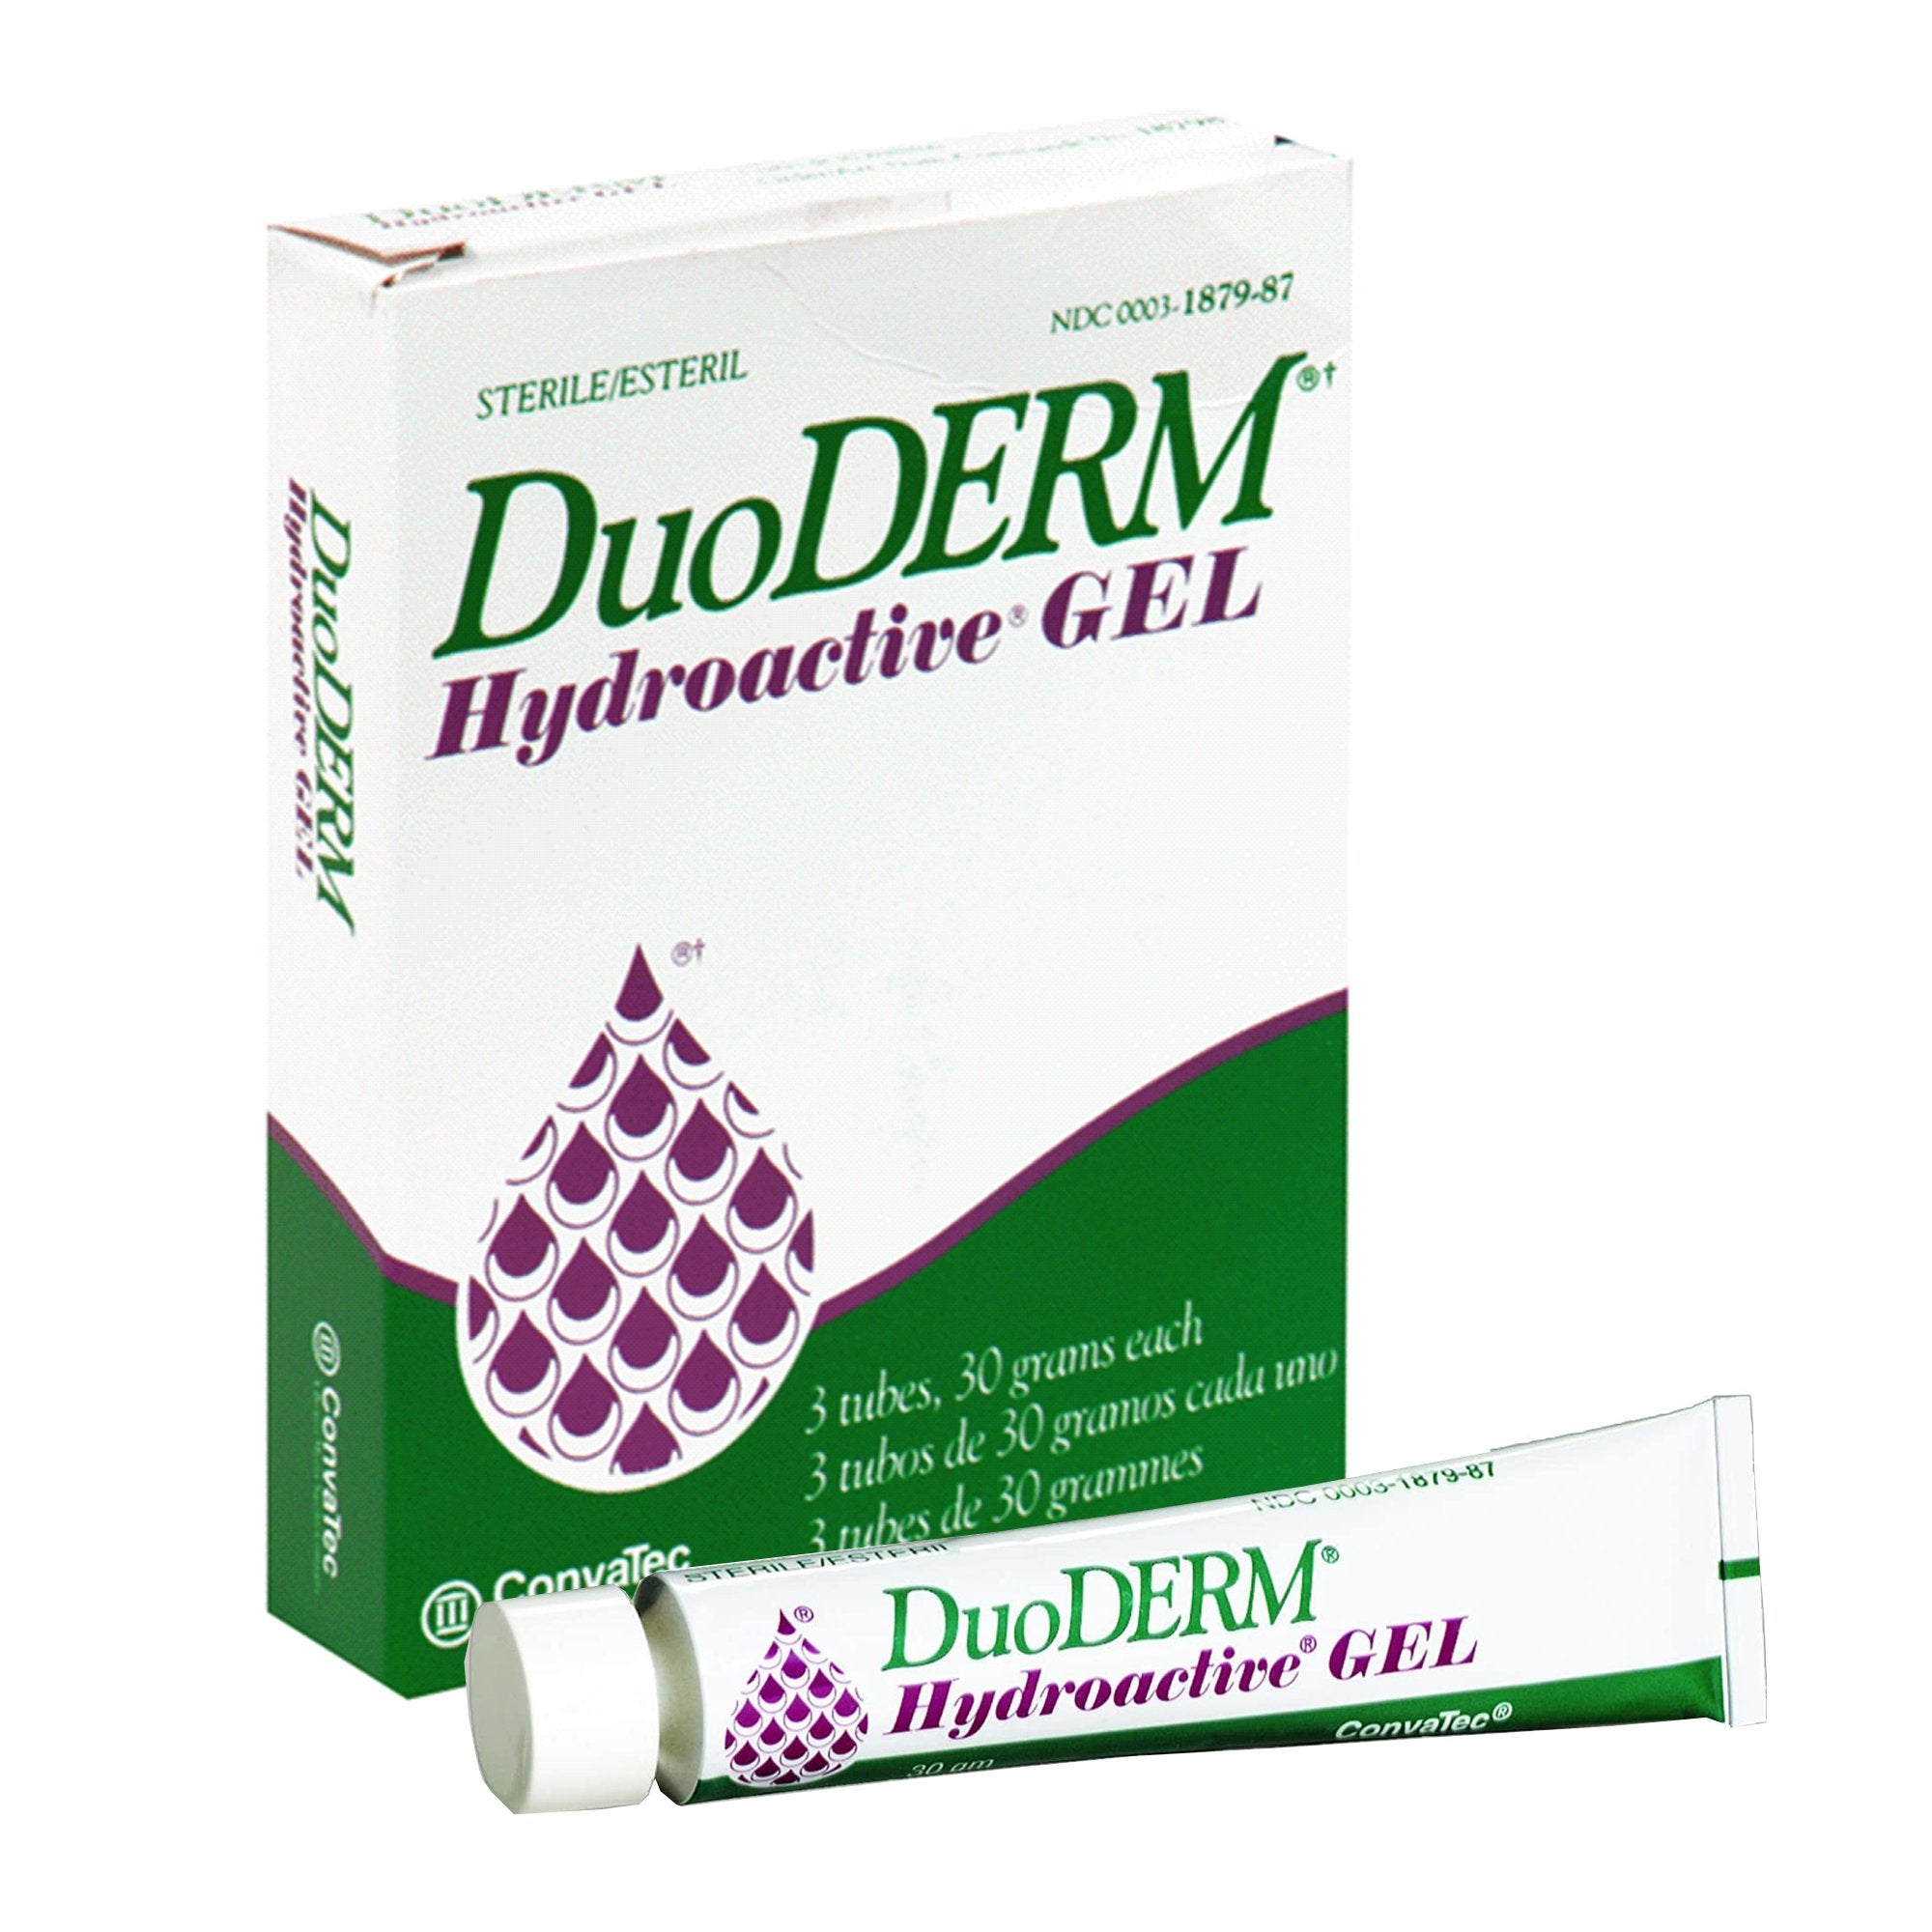 Sterile Gel DuoDERM Hydroactive 30 gm Sterile